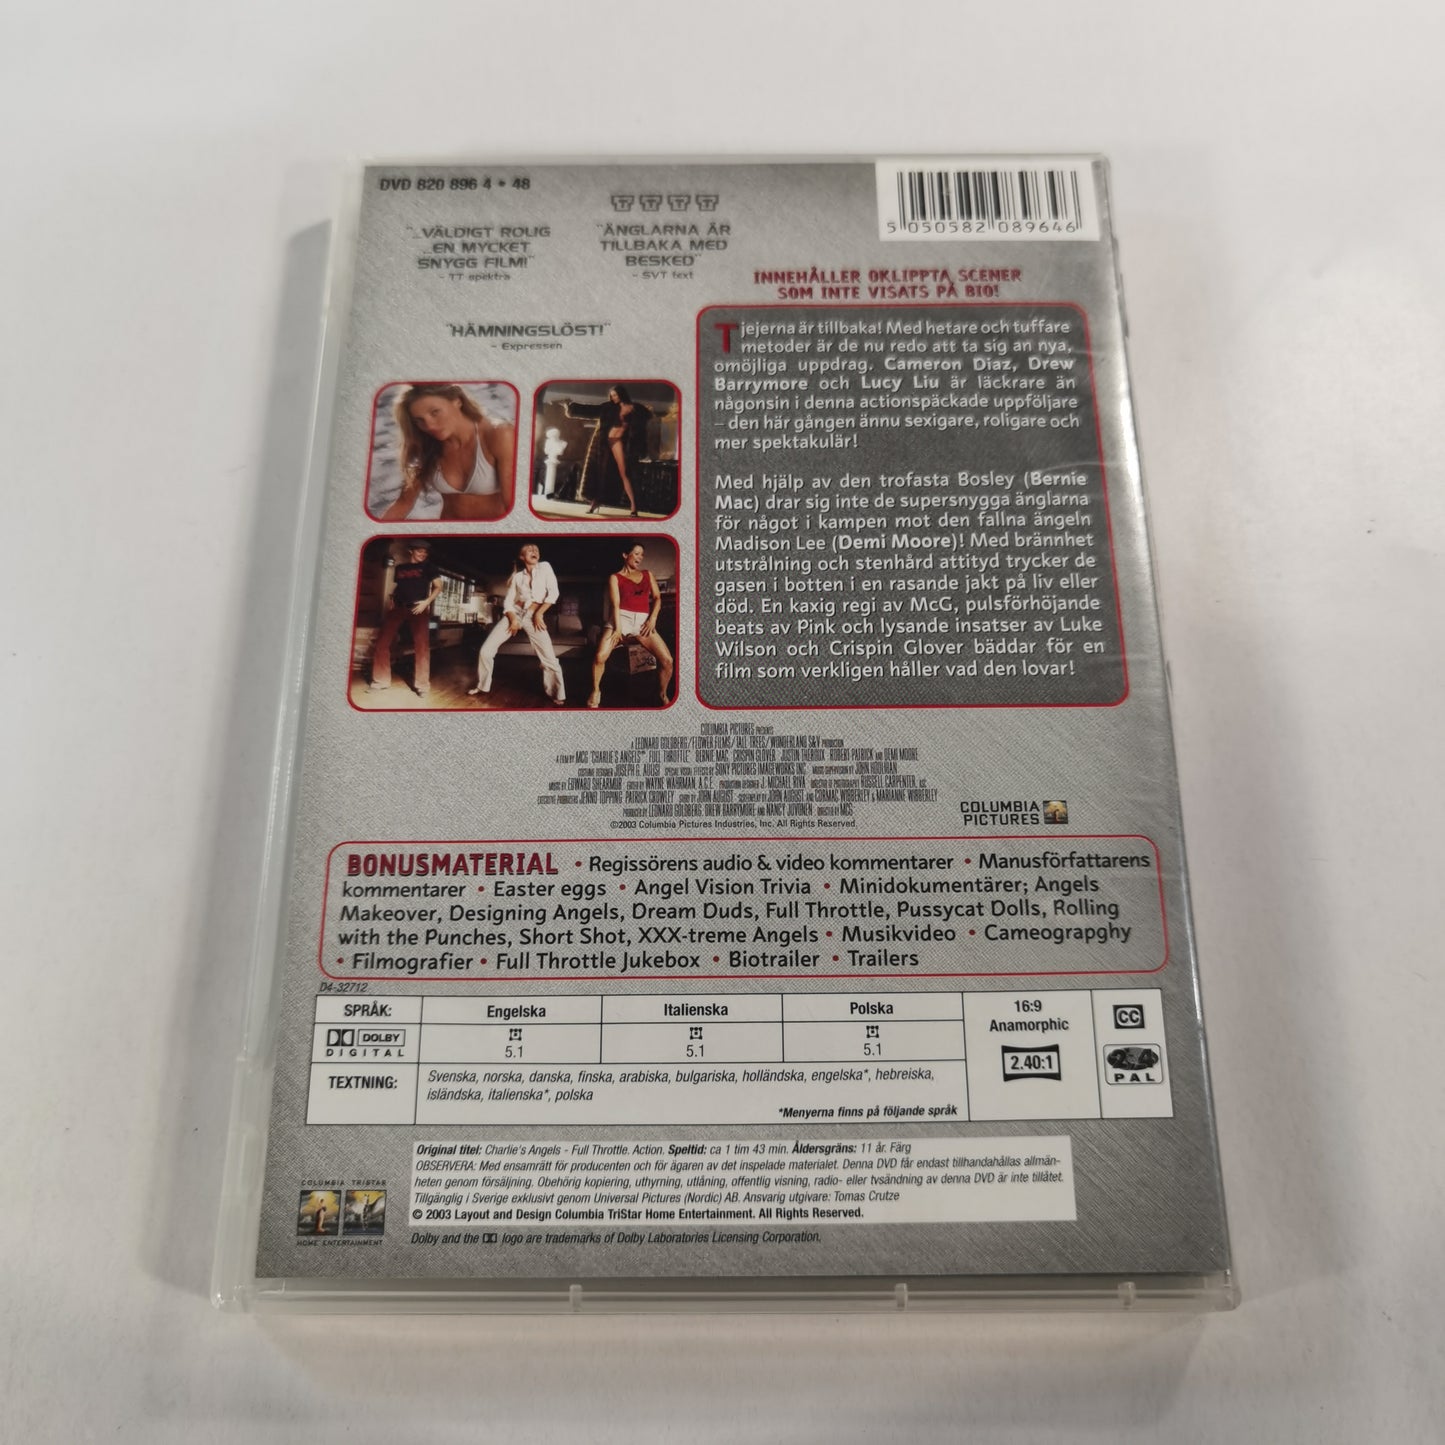 Charlie's Angels: Full Throttle ( Charlies Änglar ) (2003) - DVD SE 2003 Widescreen Special Edition